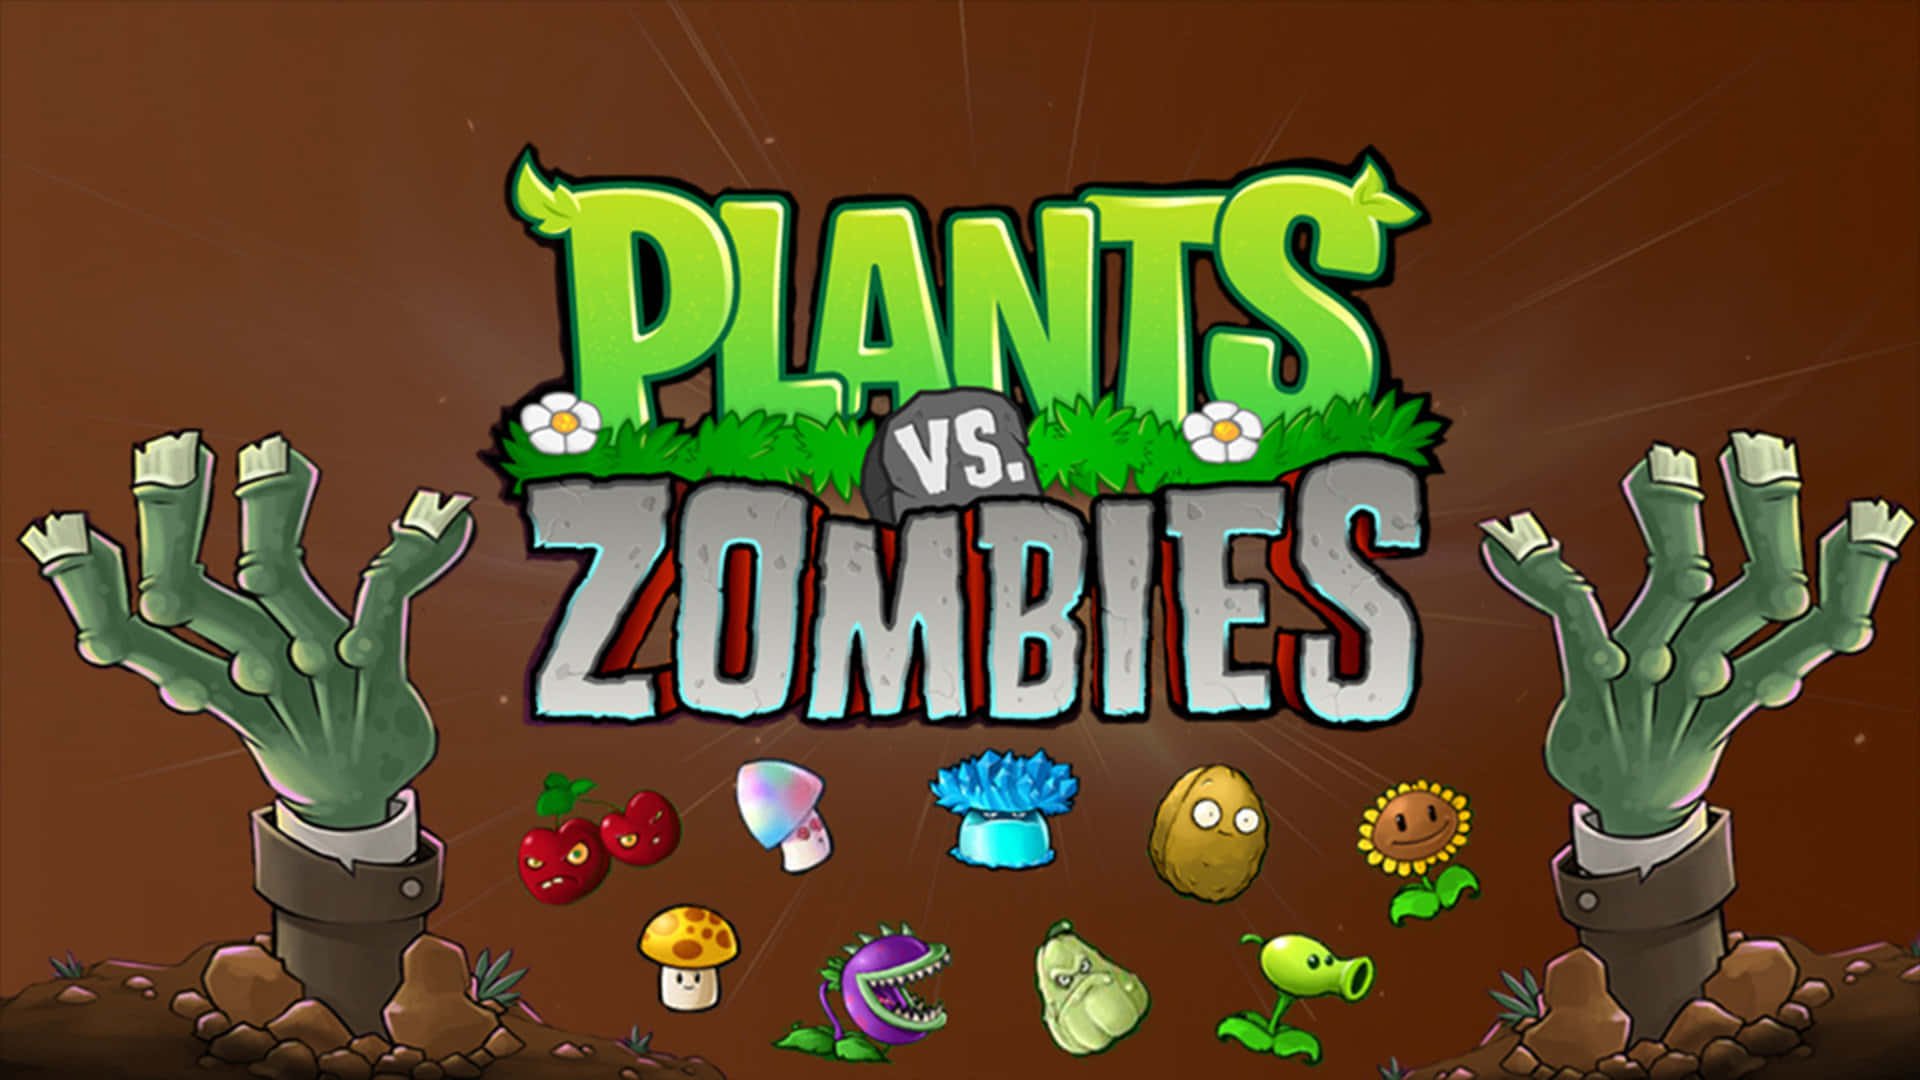 Ютуб против зомби. Растения против зомби 1 зомби. Игра Plants vs Zombies 4. Растения из растения против зомби 1. Растение против зомби растения зомби.